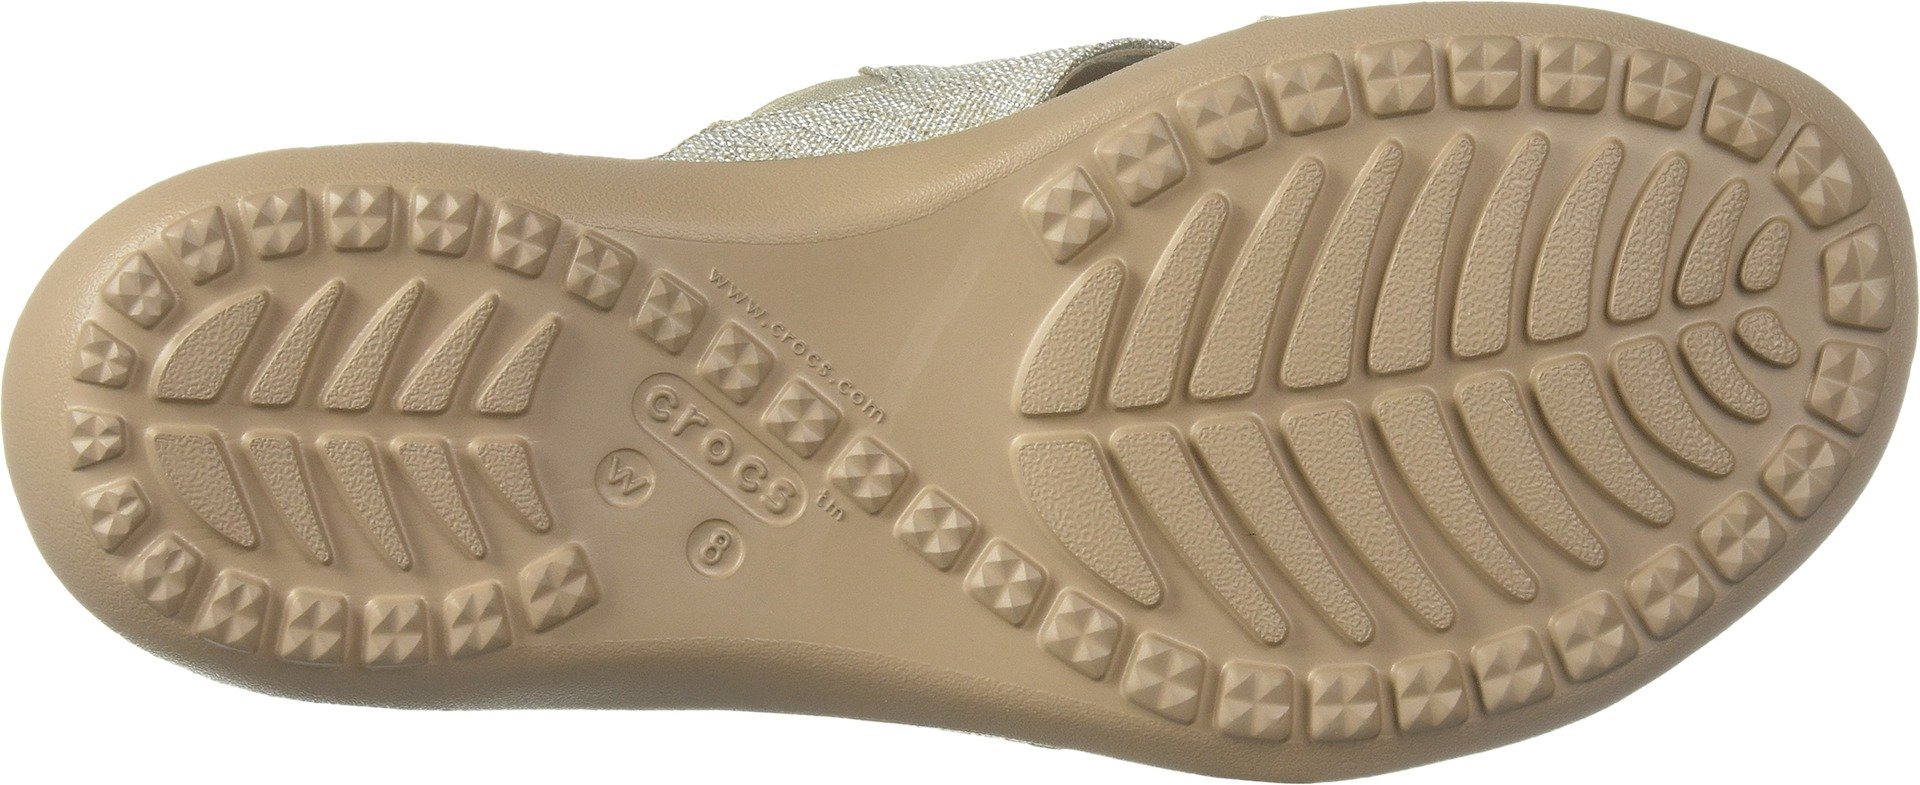 Crocs Women's Cprishmrxbsndlw Slide Sandal, Oyster/Cobblestone, 4 M US